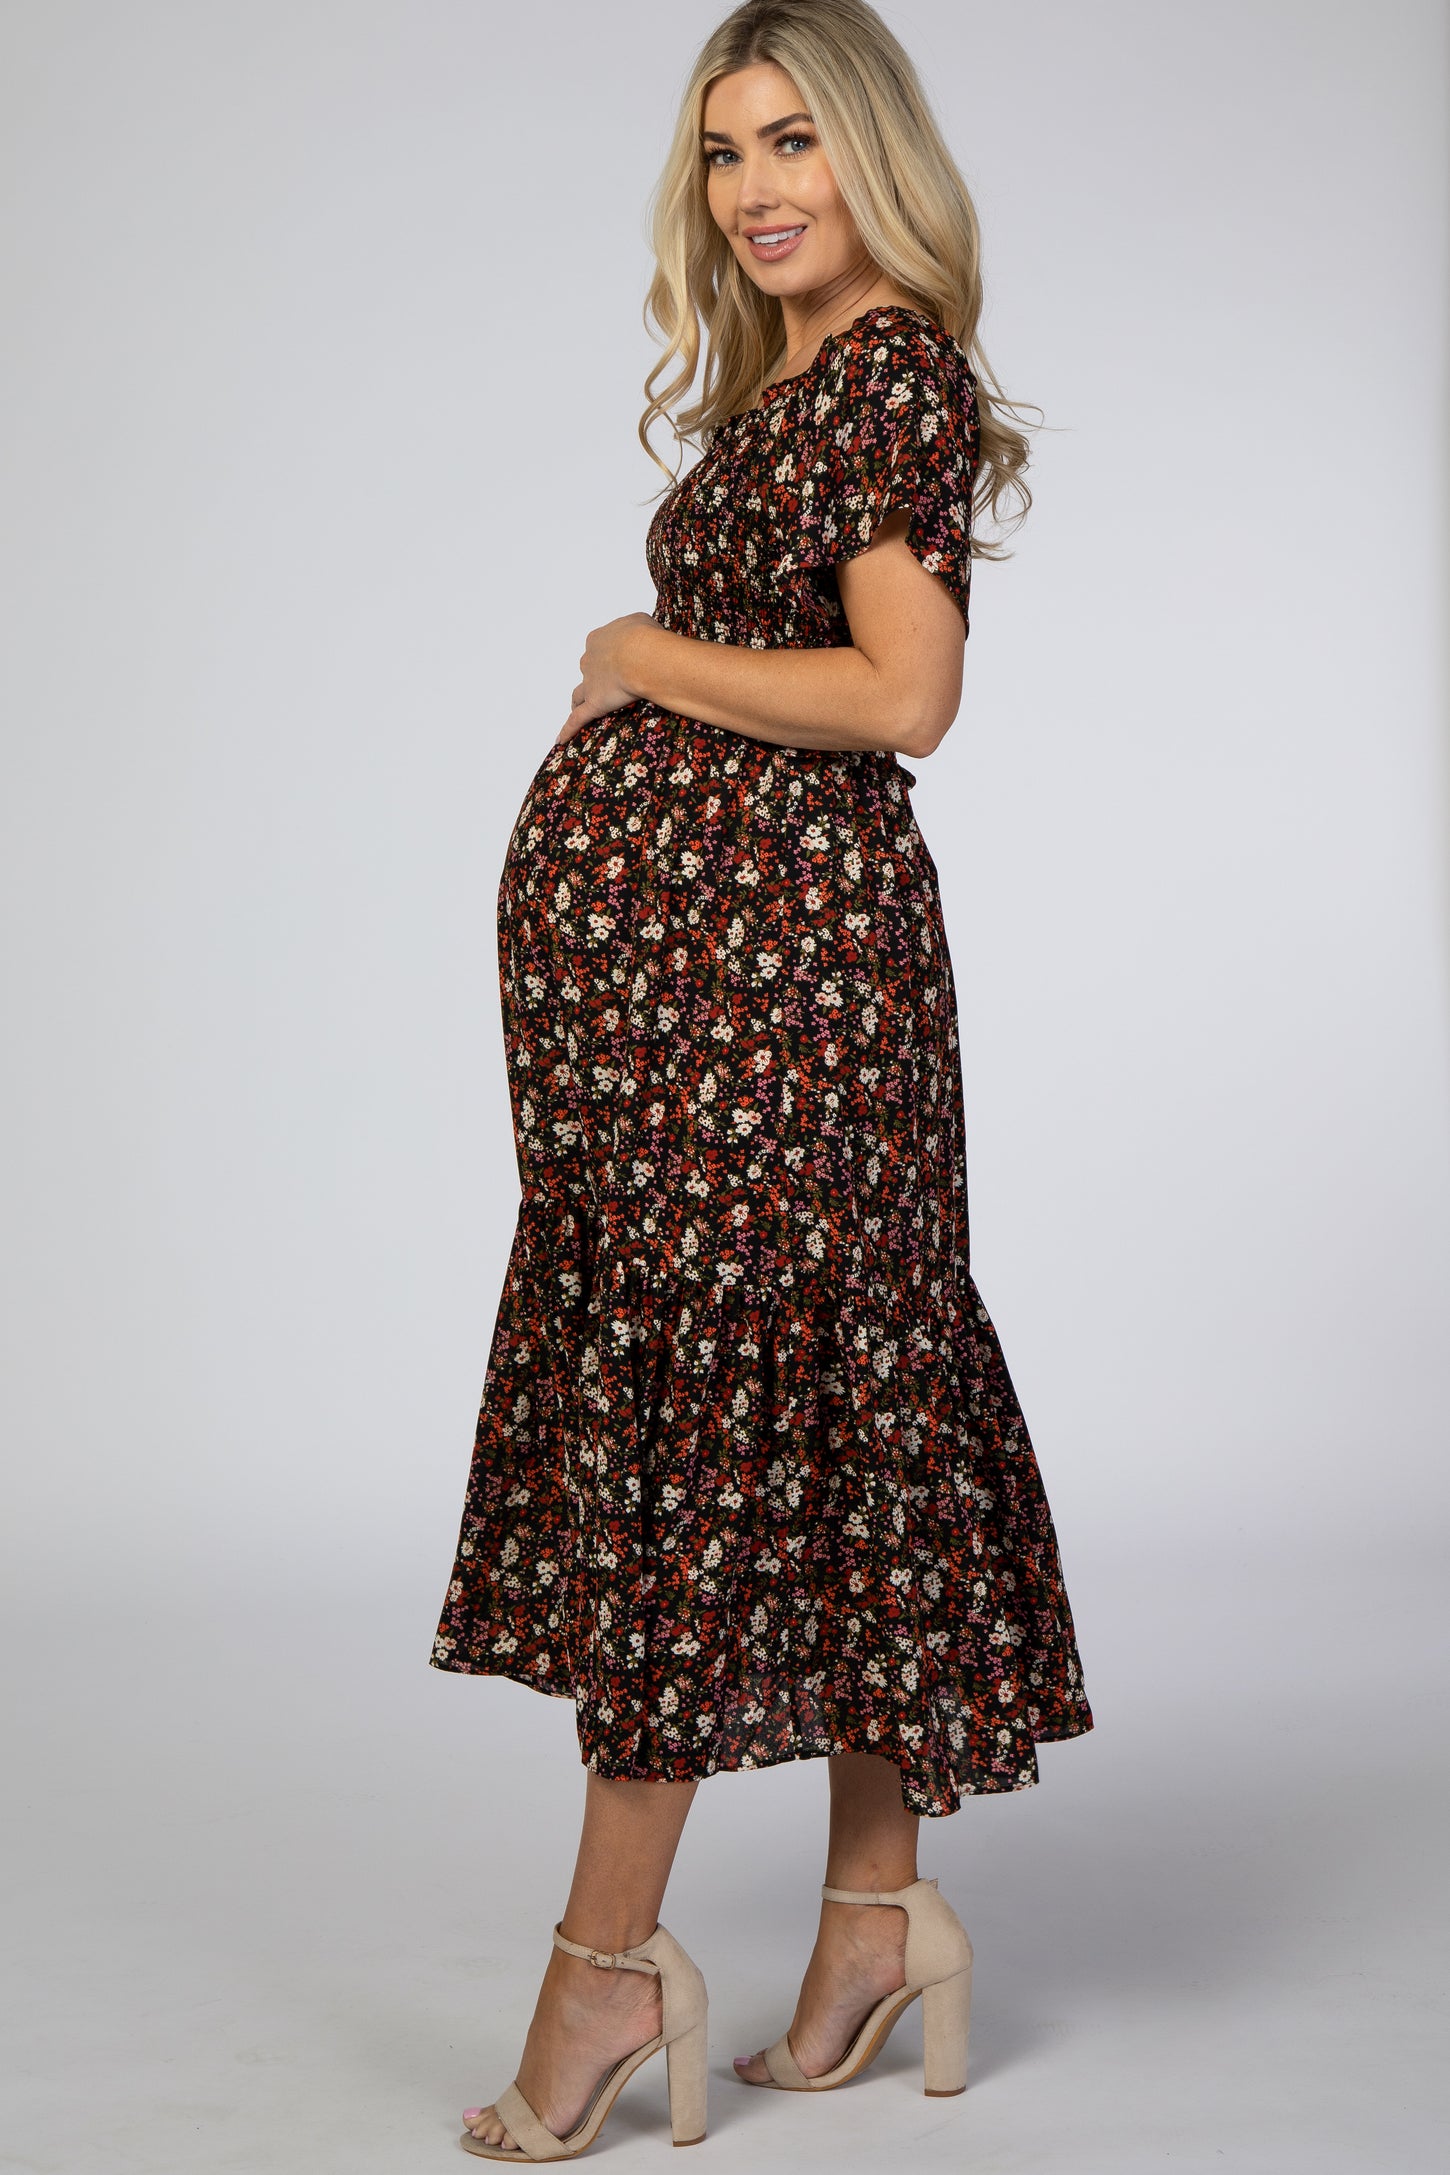 Black Floral Maternity Maxi Dress